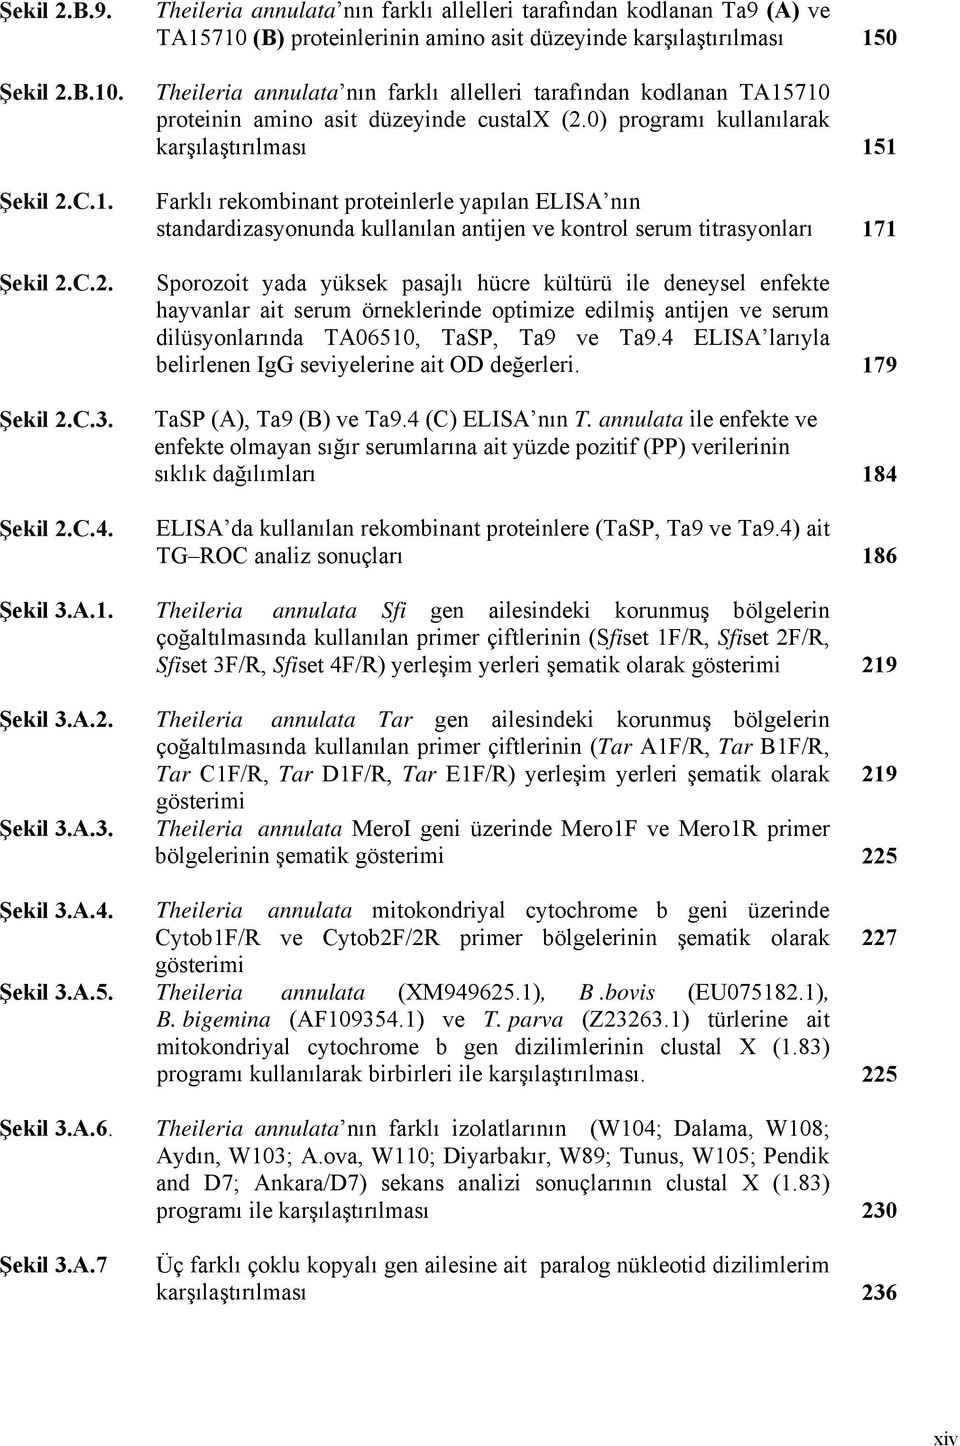 kodlanan TA15710 proteinin amino asit düzeyinde custalx (2.